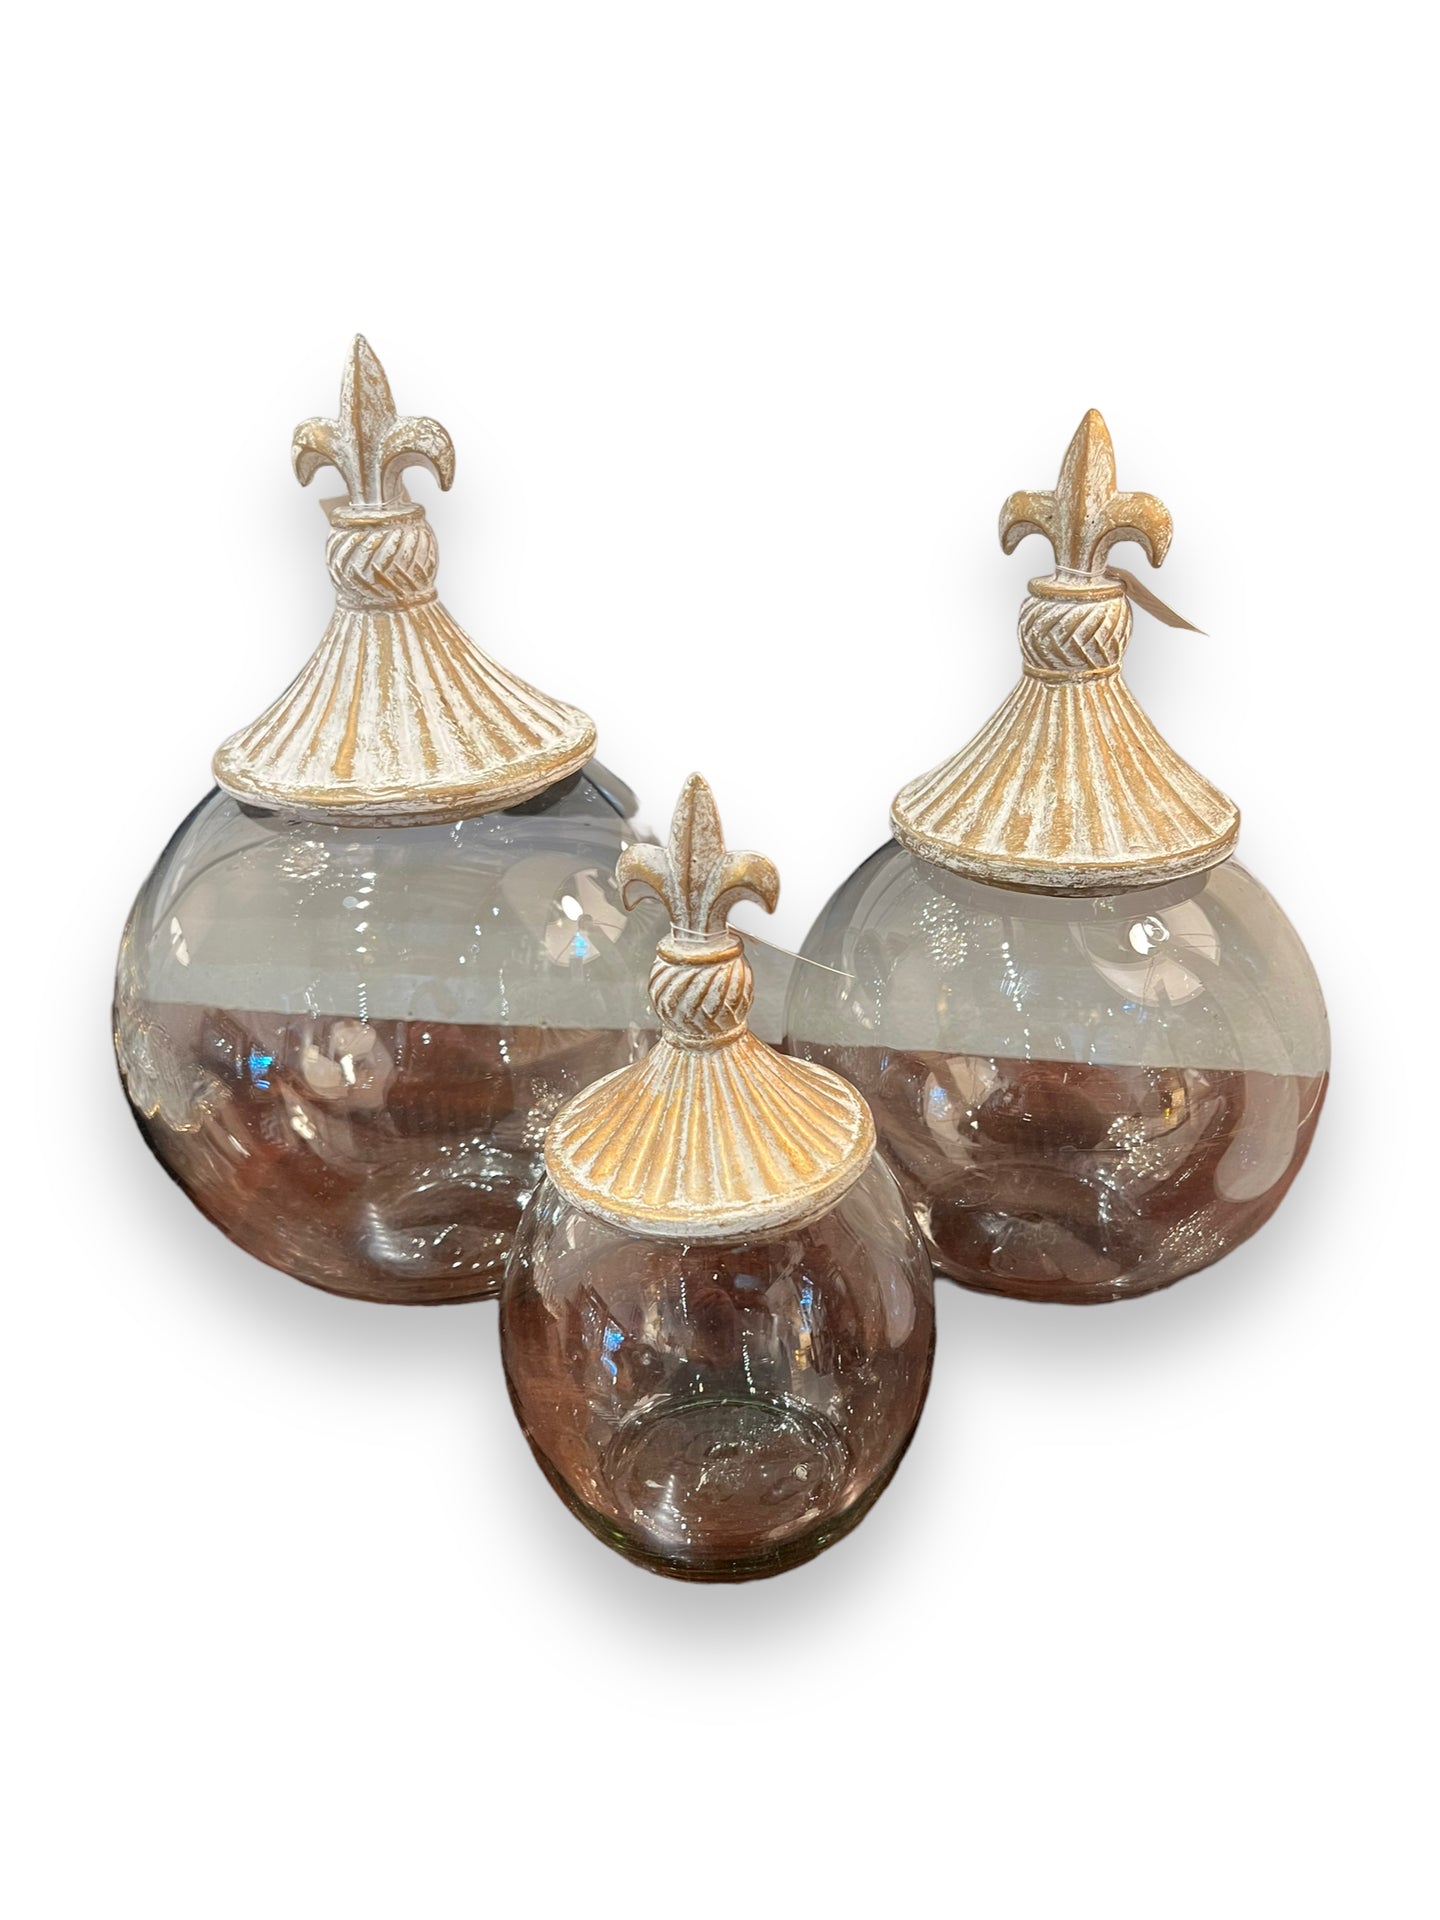 Set of 3 Decorative Gilded Bowl Globes with Fleur de lis Lids - DeFrenS